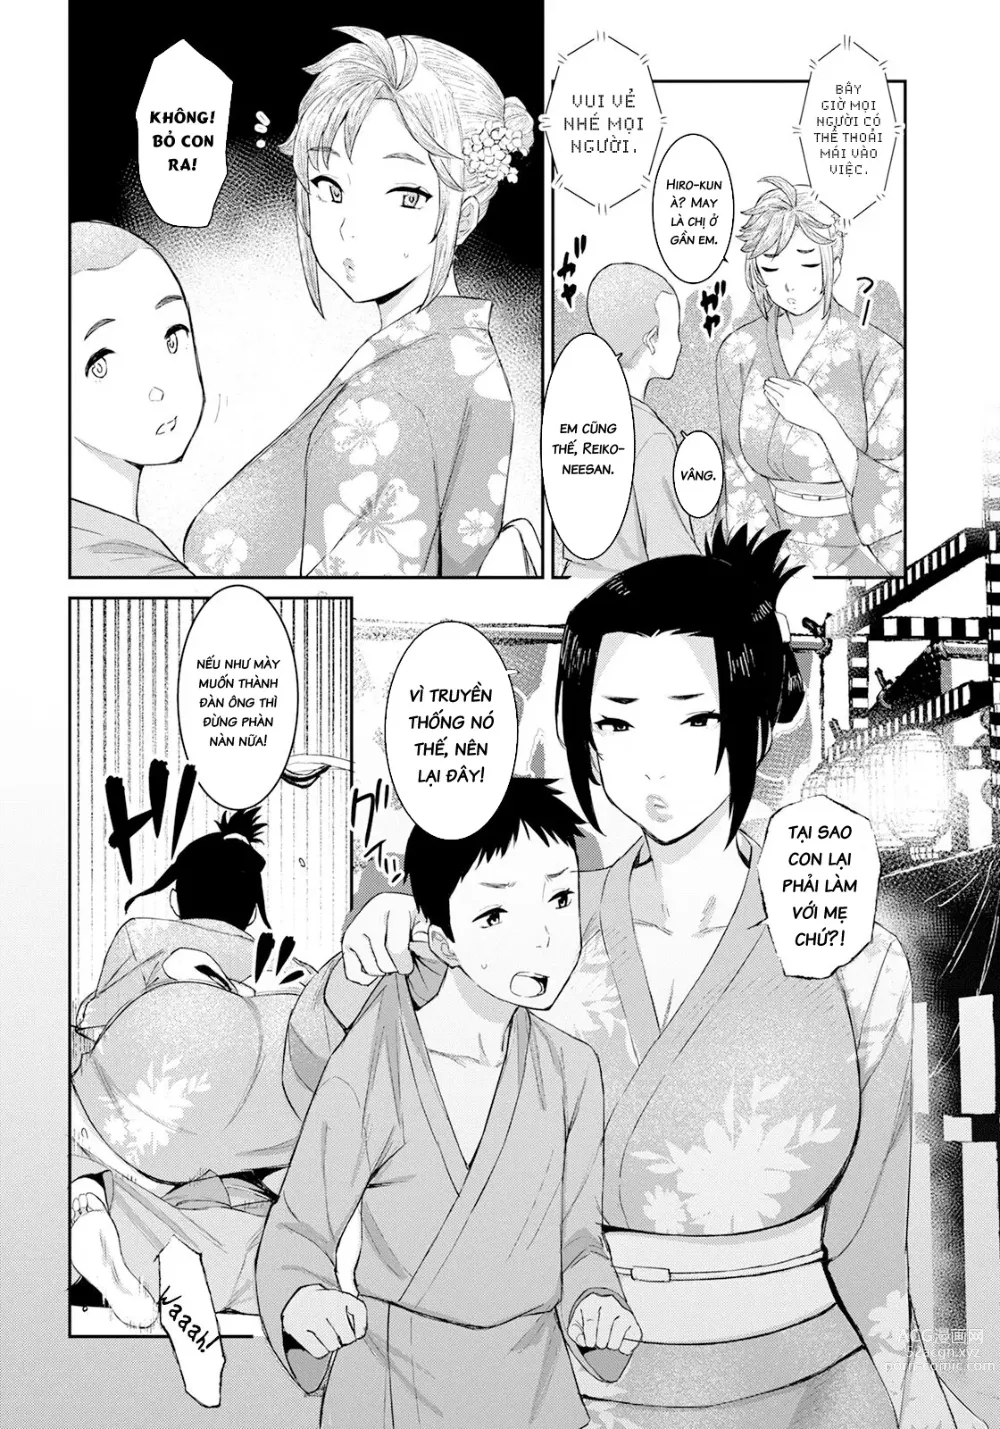 Page 5 of doujinshi Lễ hội thụ thai